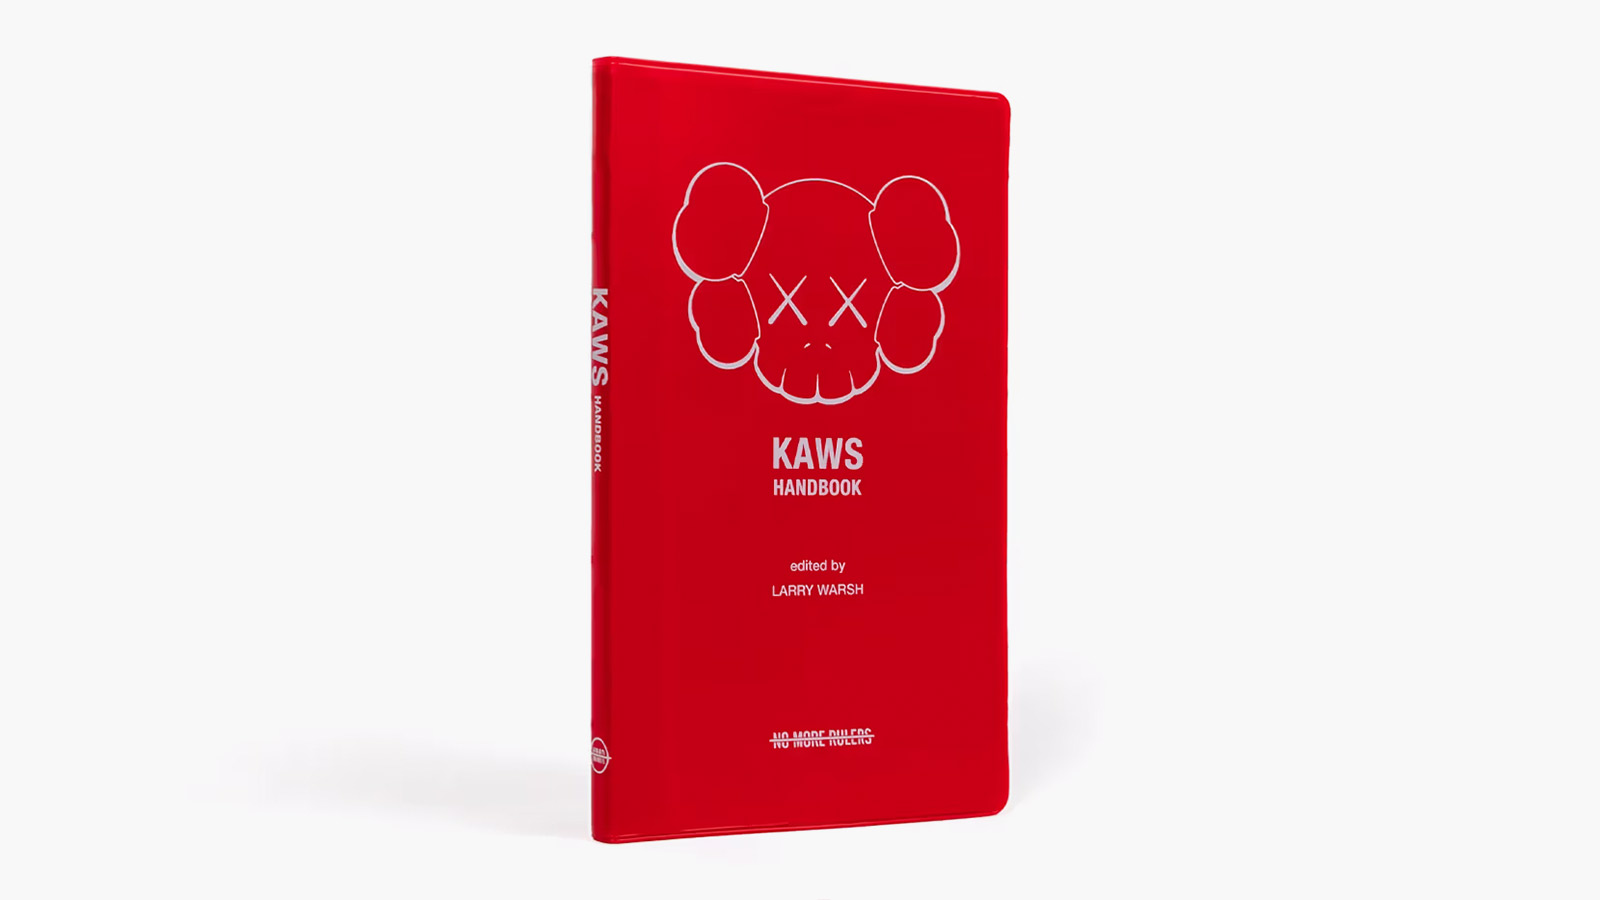 KAWS-Handbook-by-Larry-Warsh-main